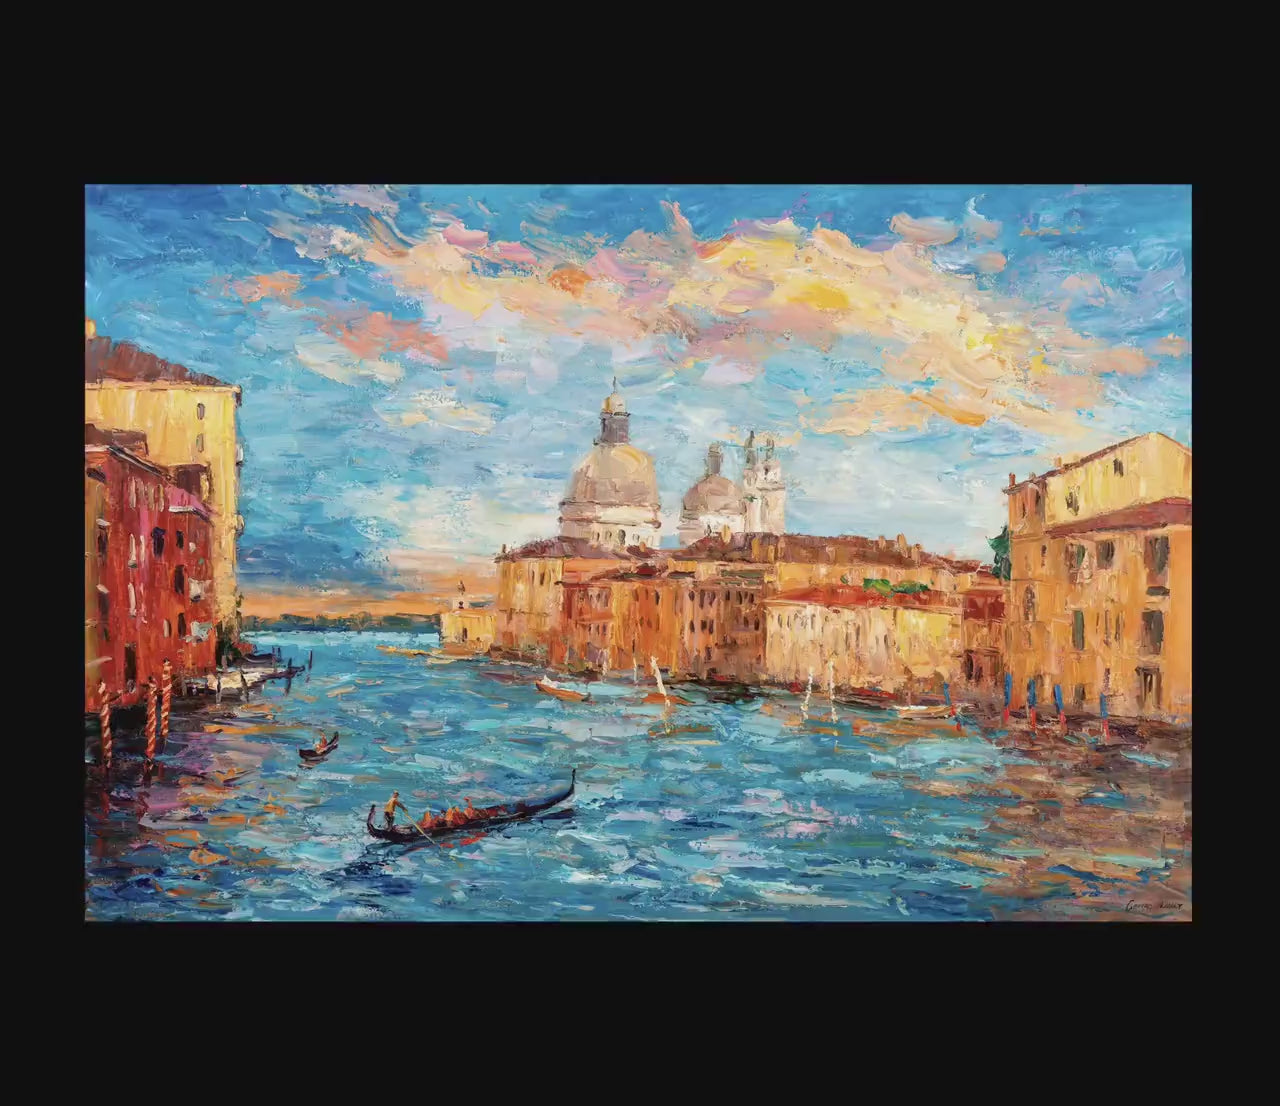 Oil Painting Venice Grand Canal Gondola, Canvas Painting, Oil Painting, Large Oil Painting Original Canvas, Handmade, Contemporary, Impasto